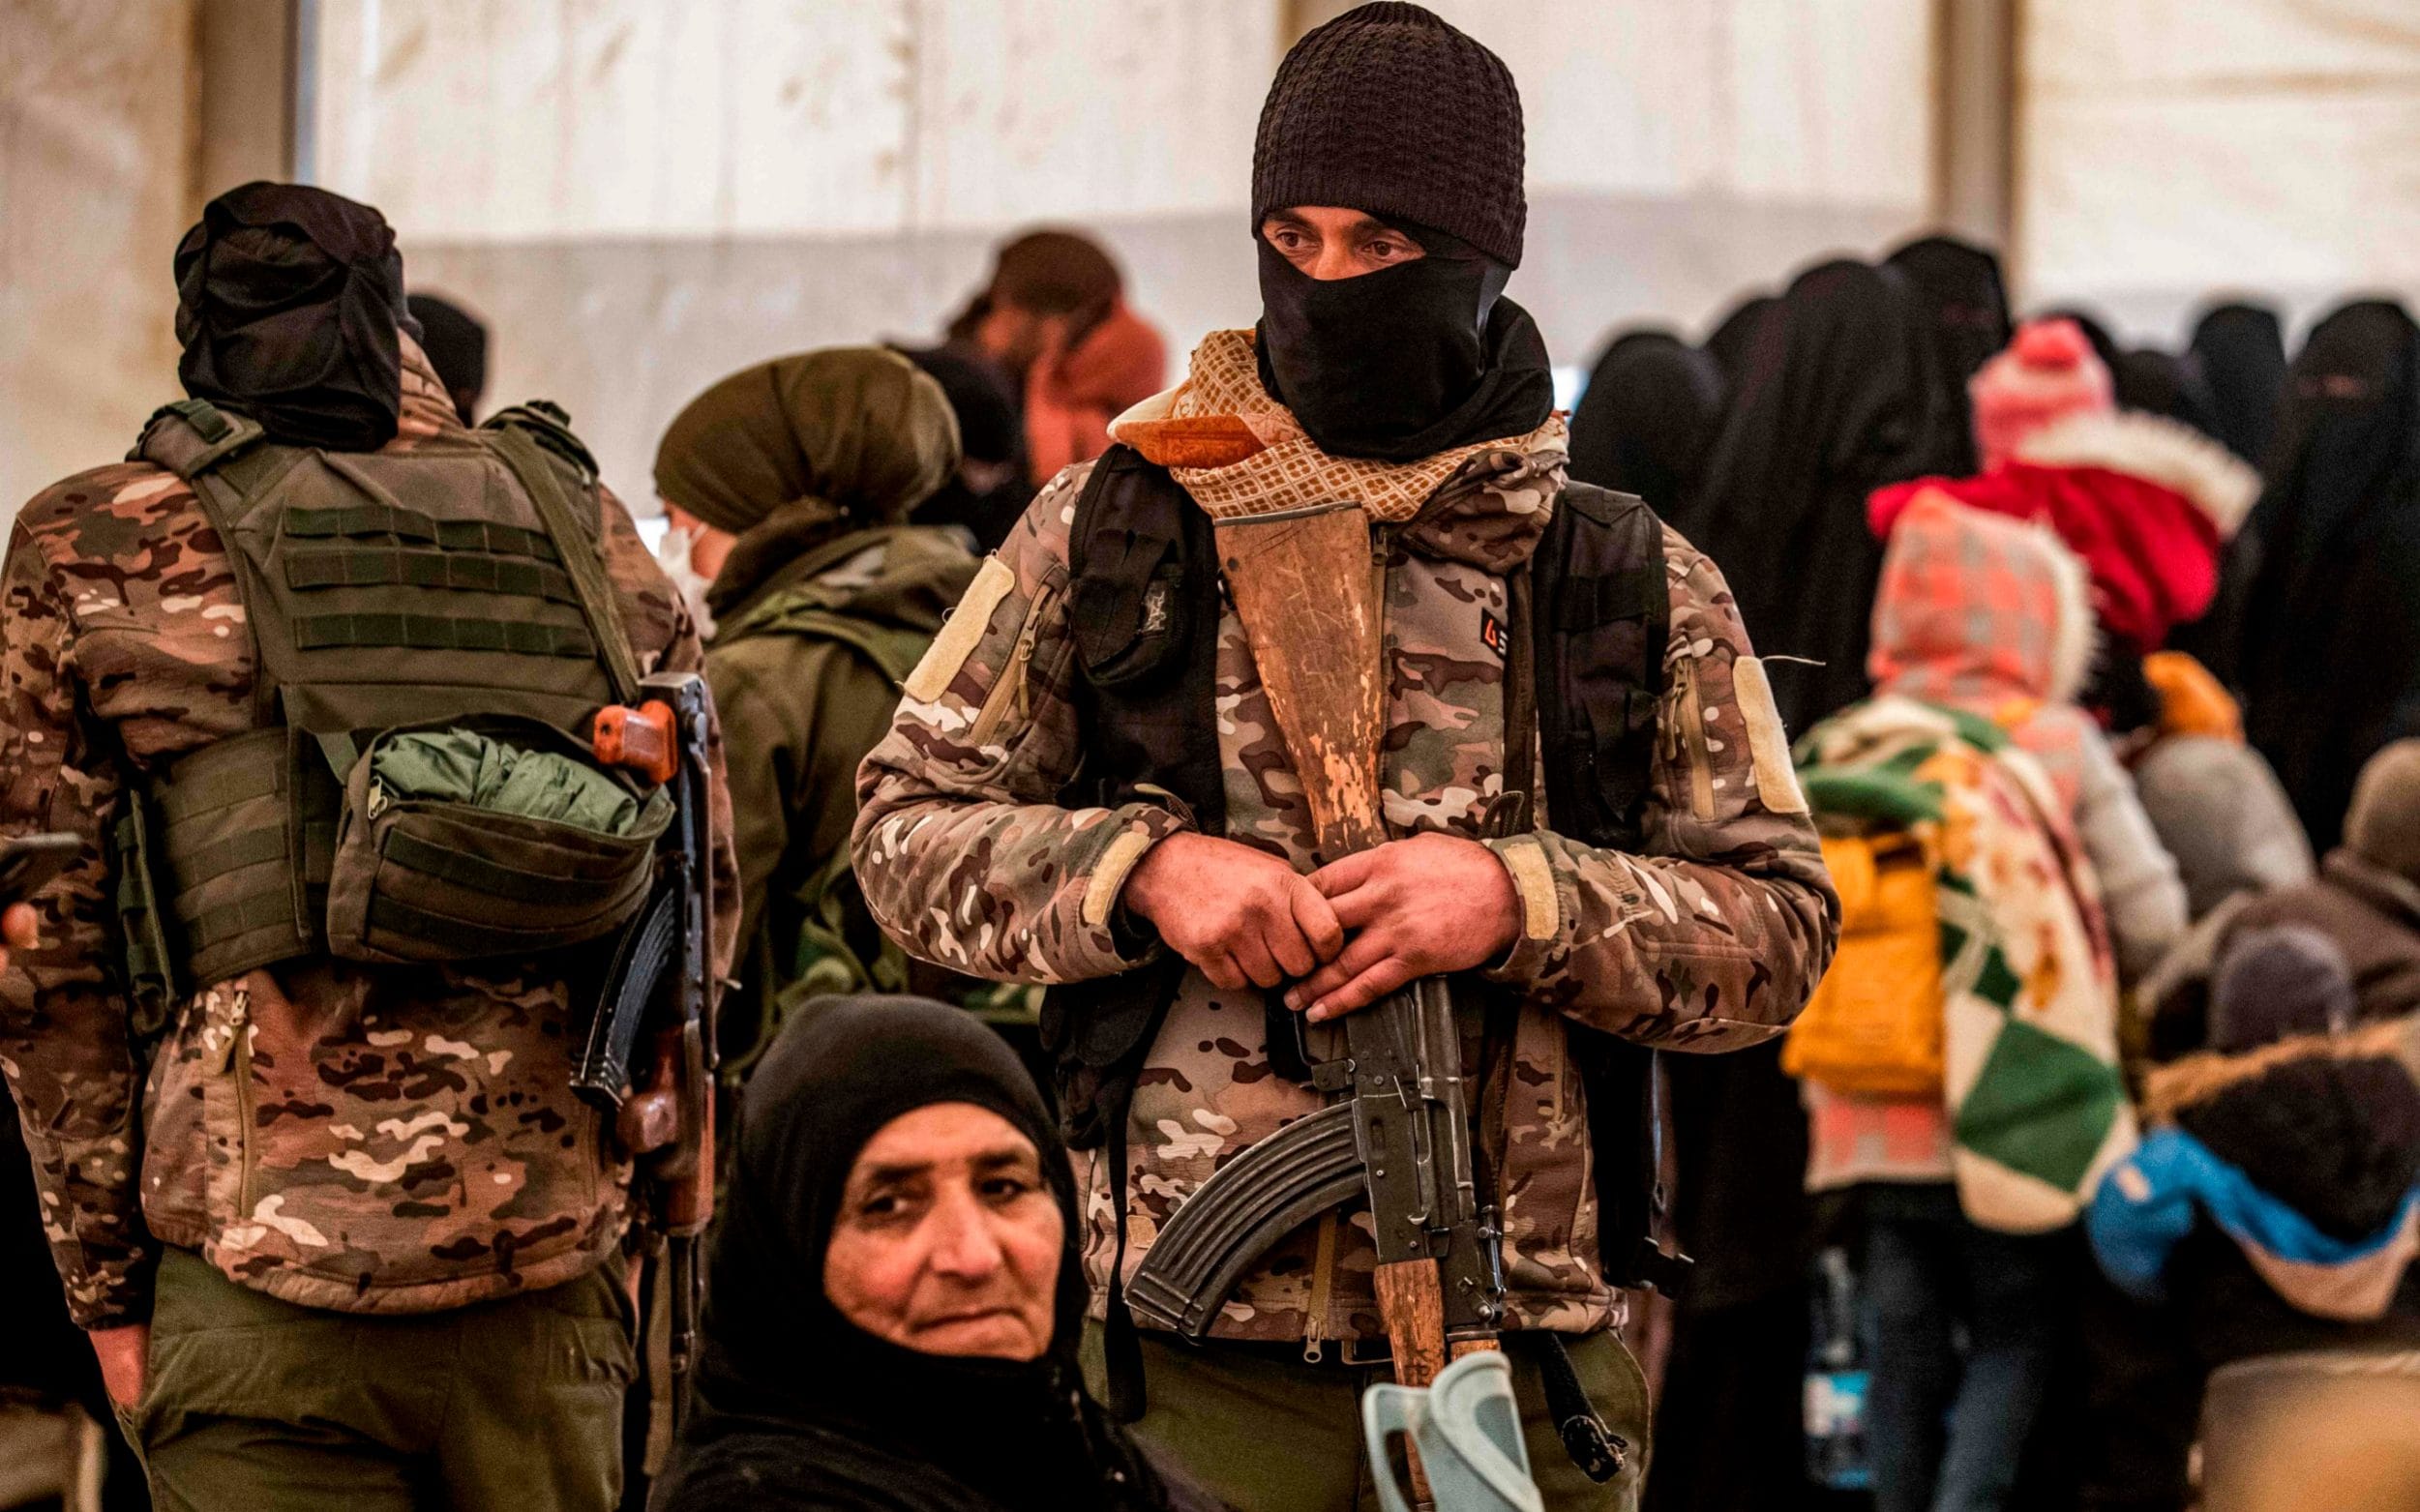 ISIS Murders in Syria’s al-Hol Camp